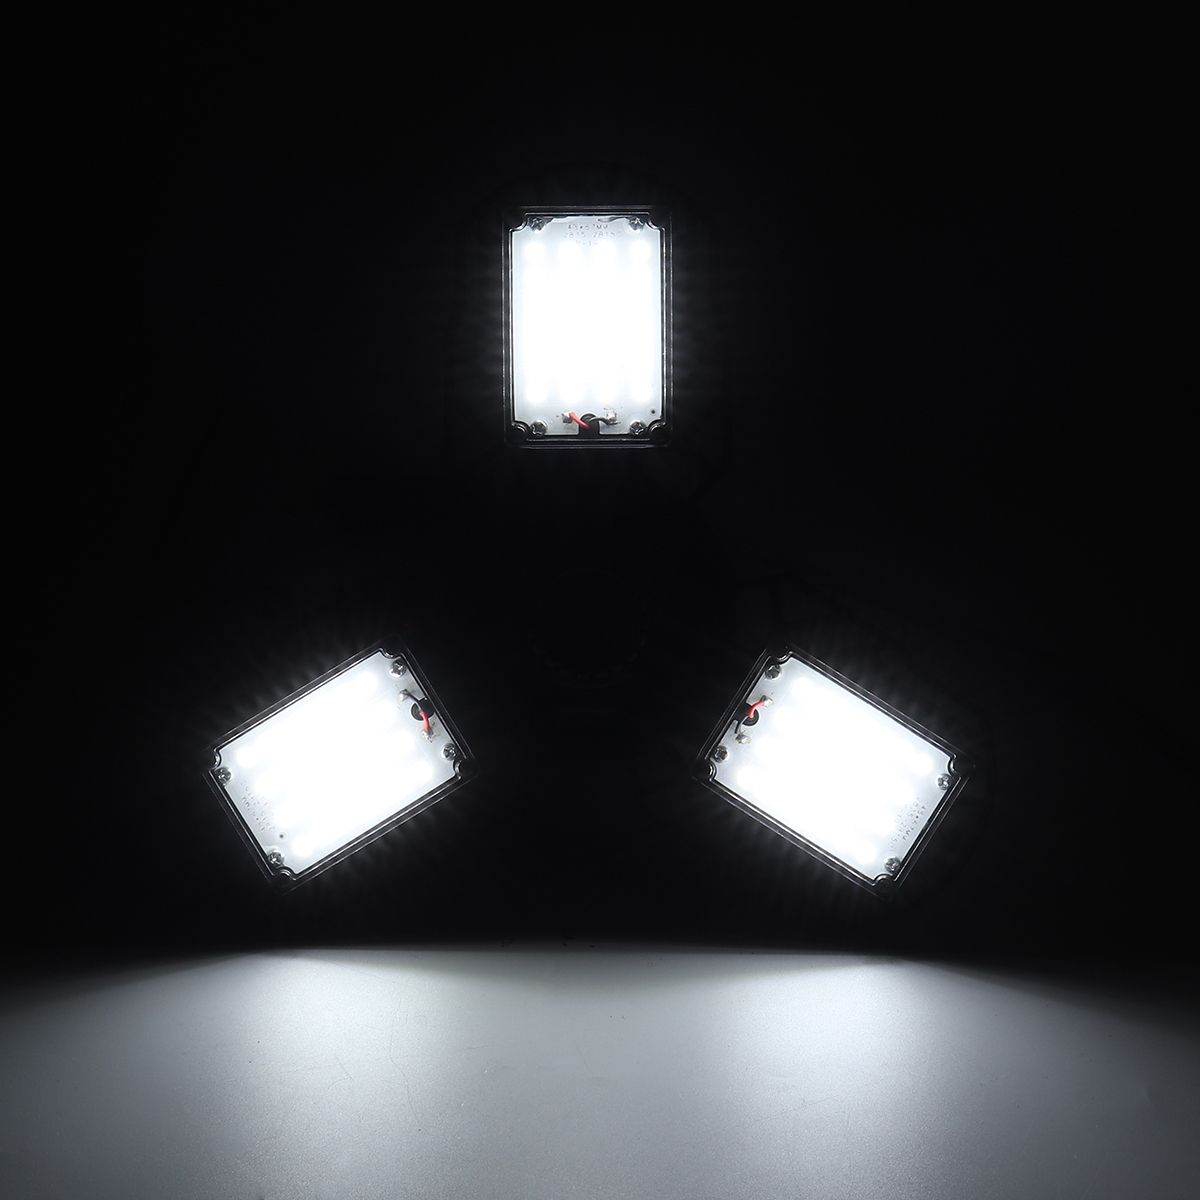 80W-LED-Garage-Lamp-Three-Leaves-E27-Light-Bulb-Deformable-Shop-Work-Lighting-Home-Ceiling-Fixtures-1691074